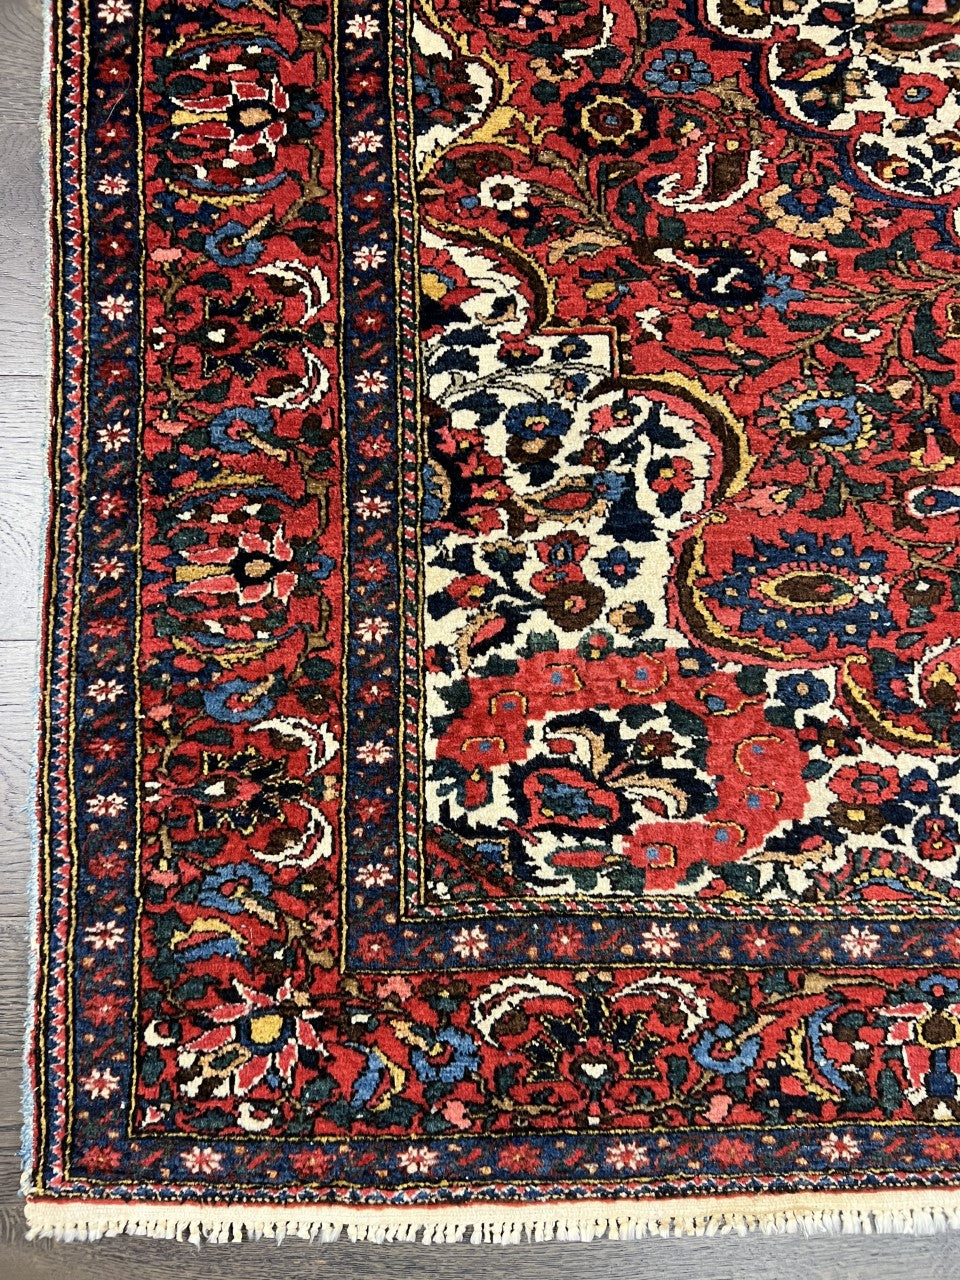 Amazing old antique handmade decorative Bakhtiyar rug - Hakiemie Rug Gallery